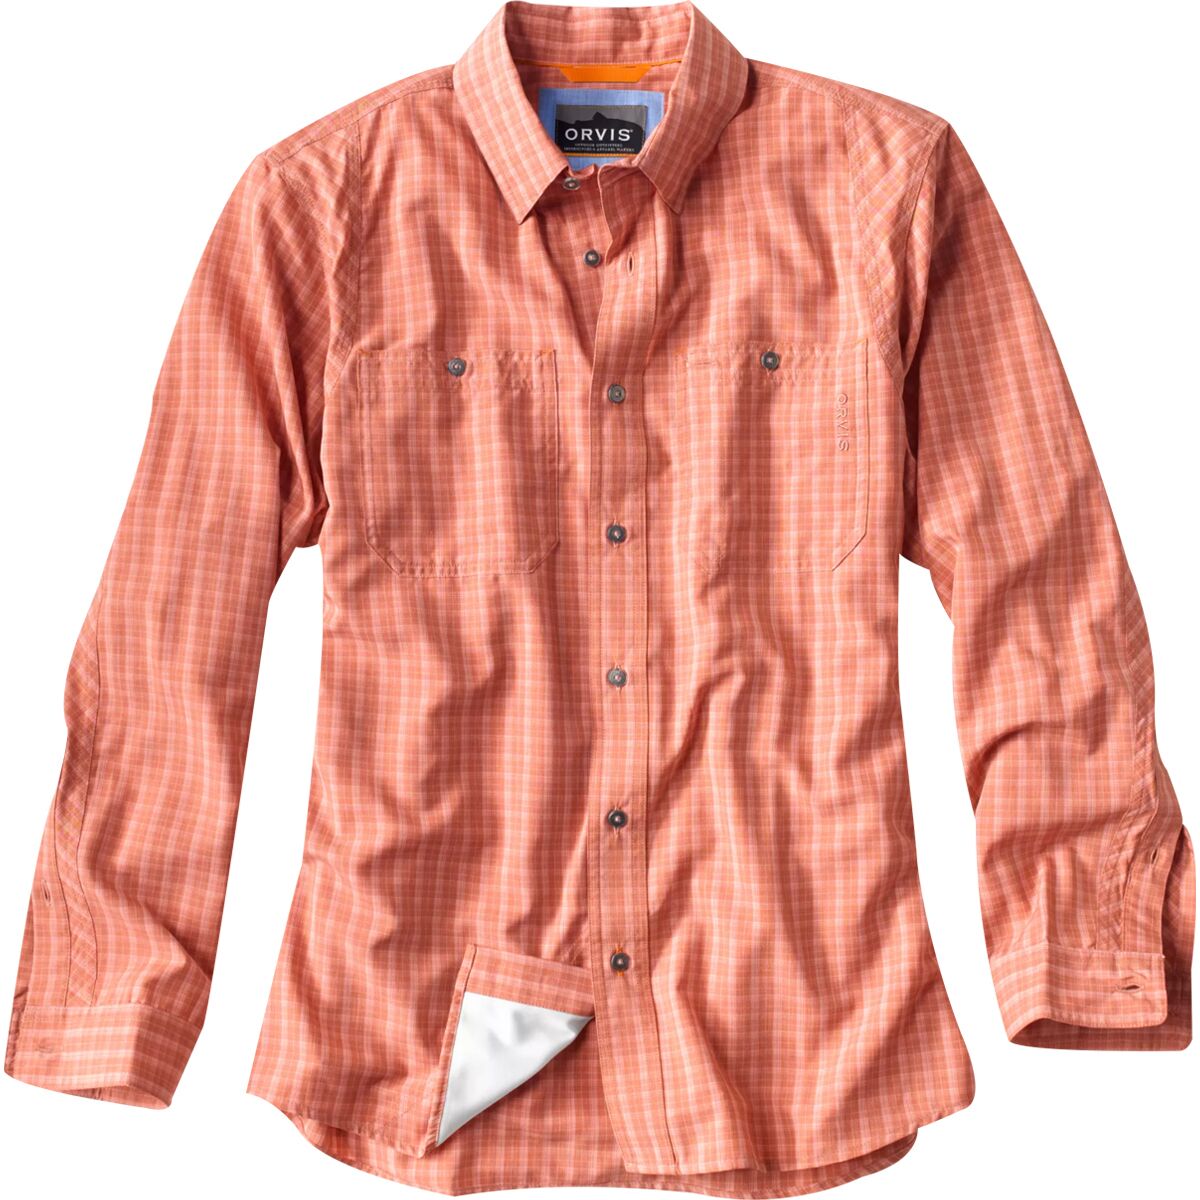 Orvis Tech Chambray Plaid Long-Sleeve Work Shirt - Men's